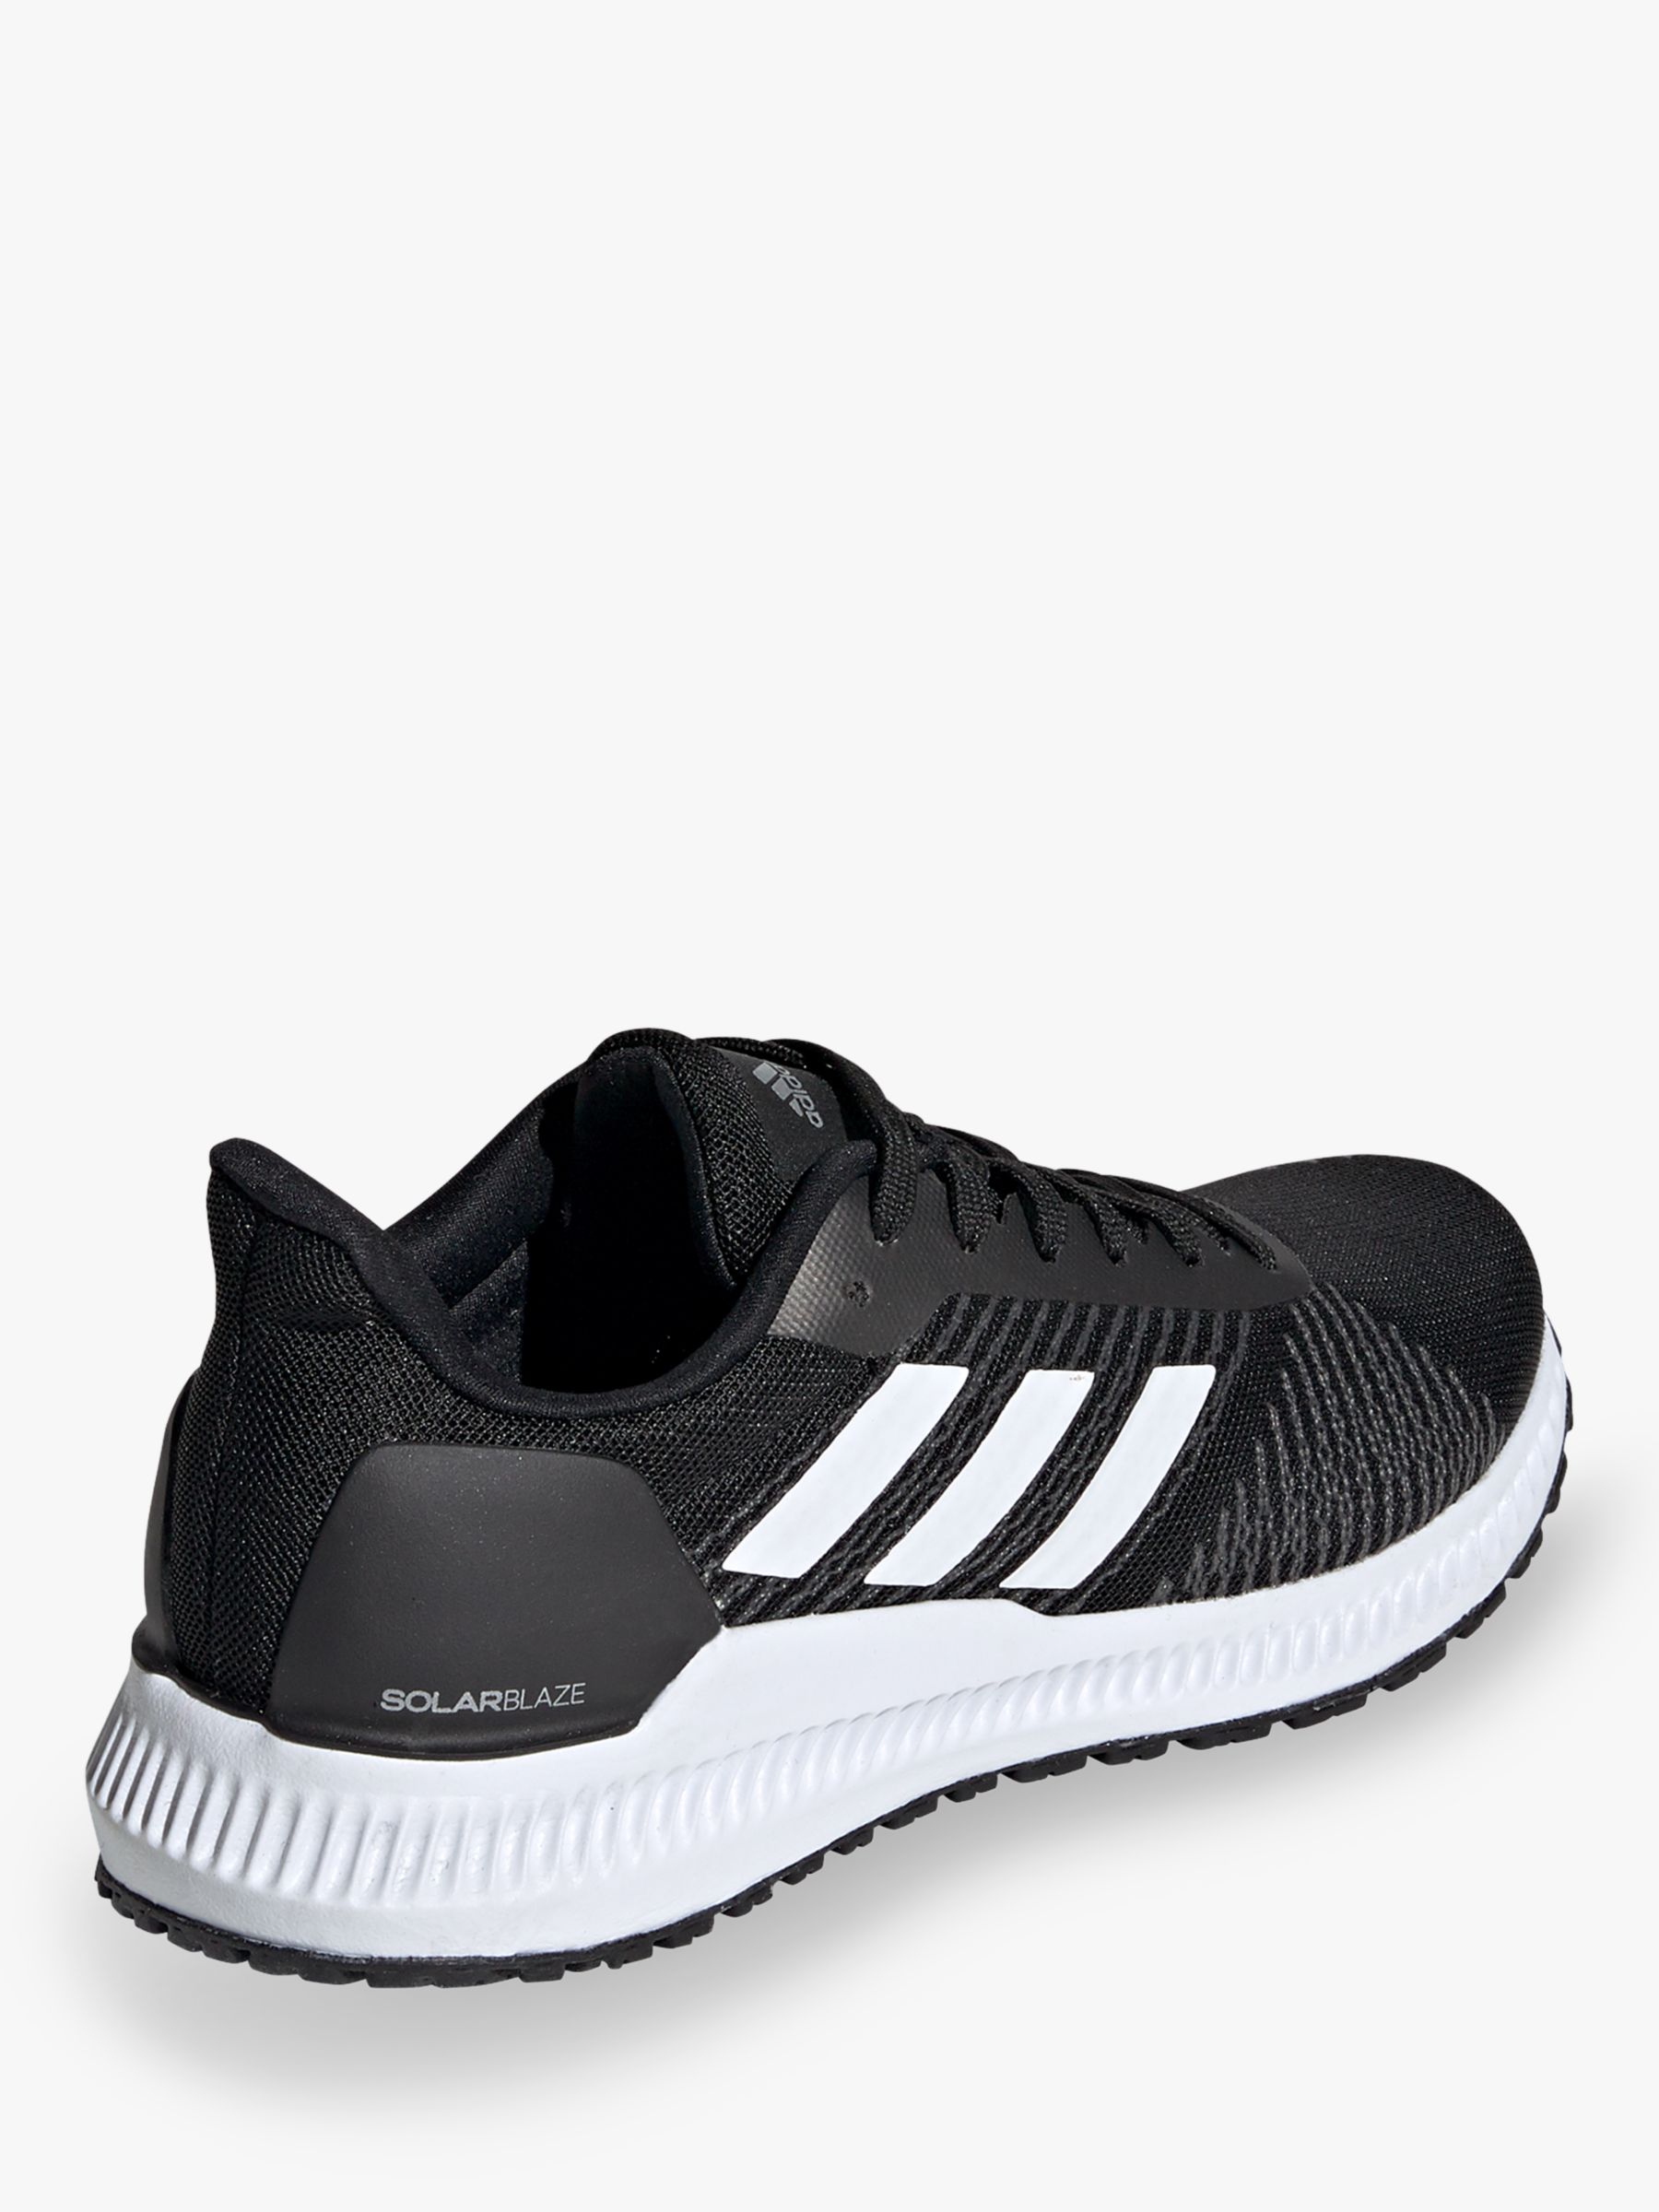 adidas solar blaze shoes